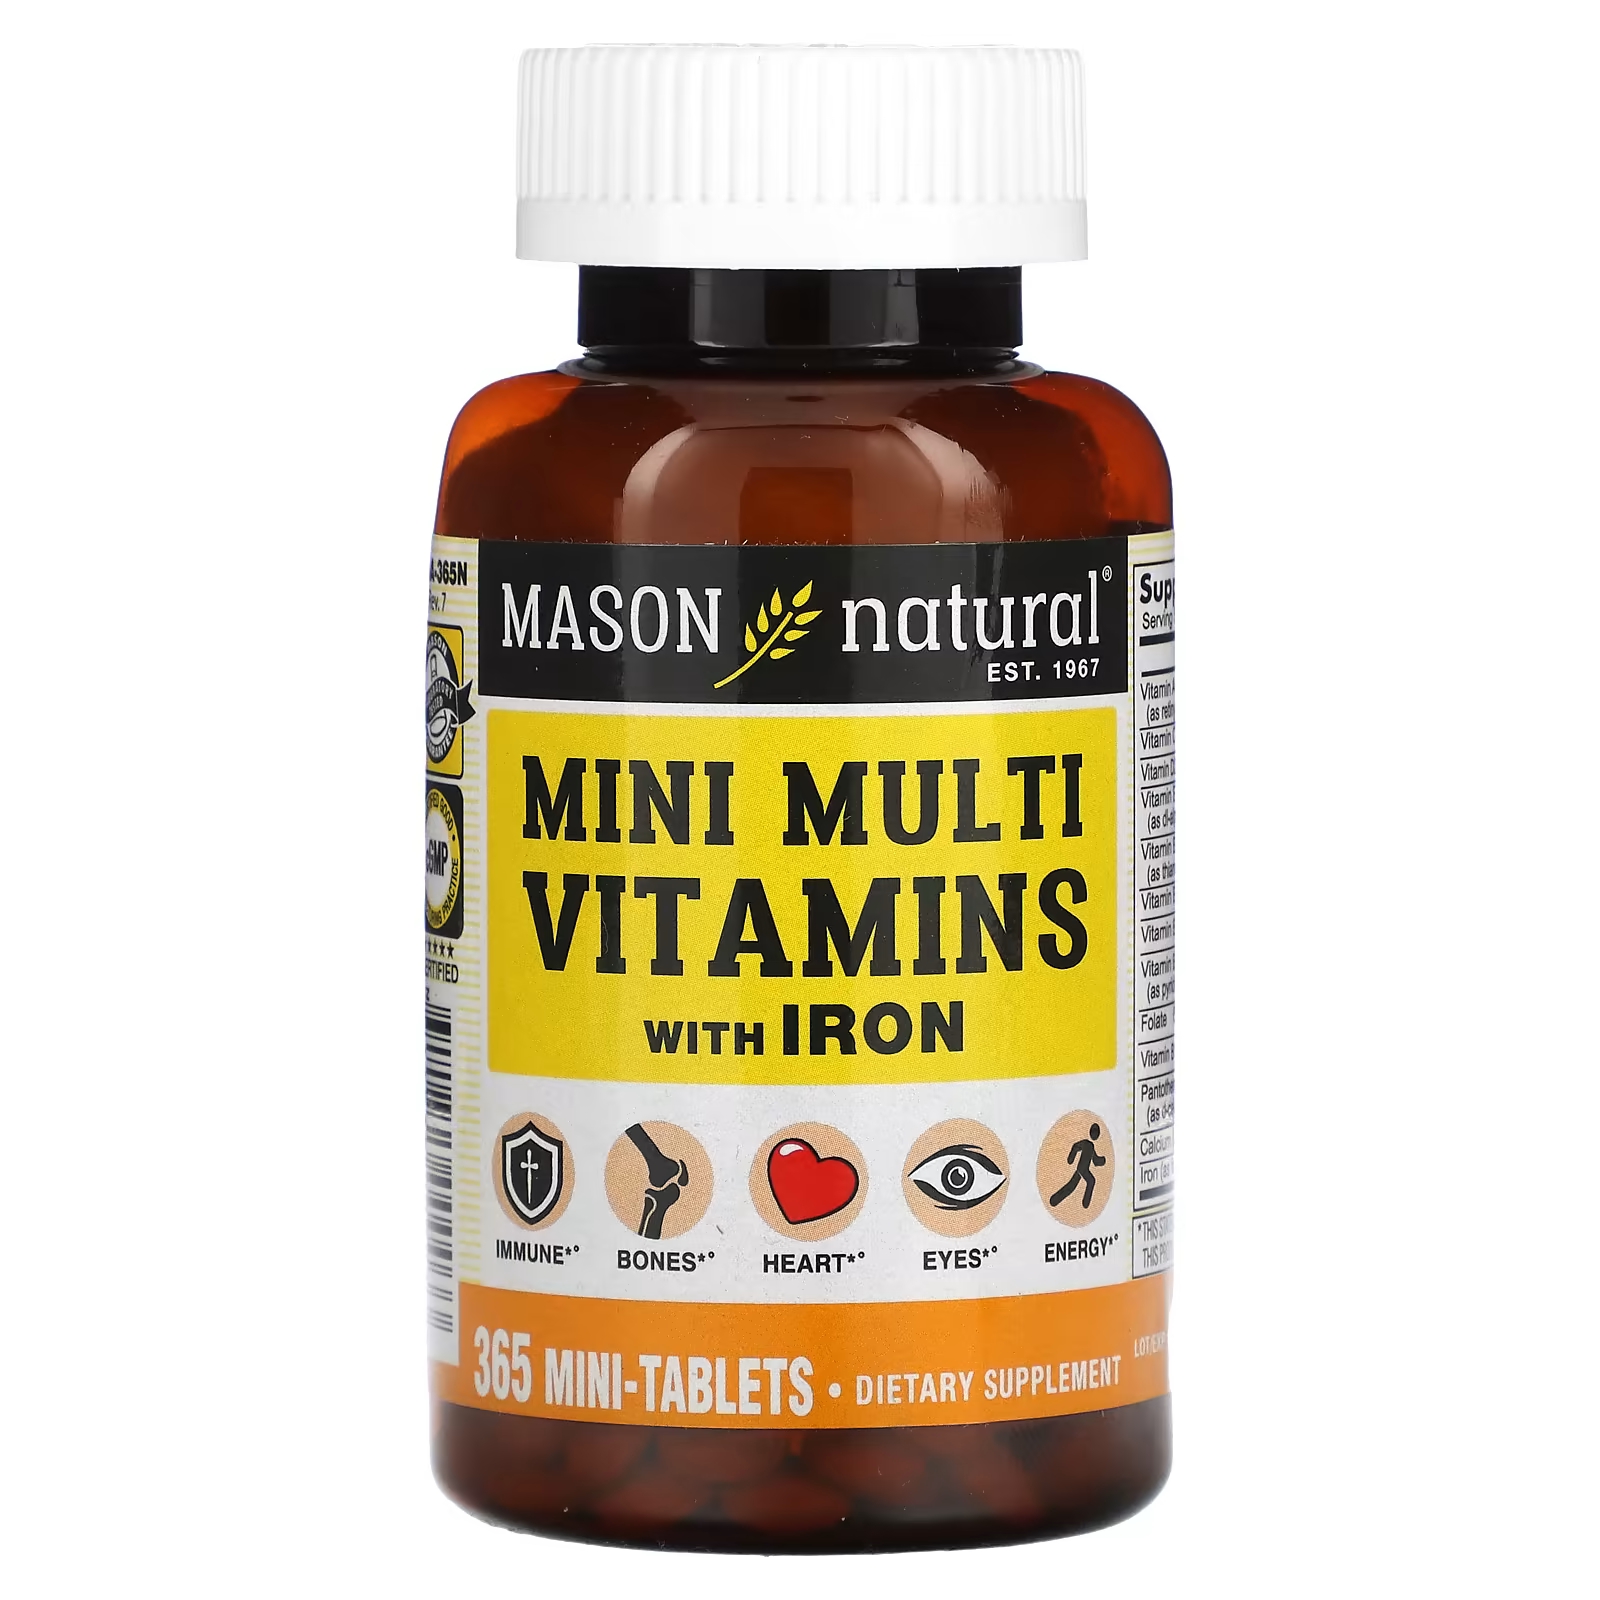 цена Мультивитамины Mason Natural с железом, 365 мини-таблеток